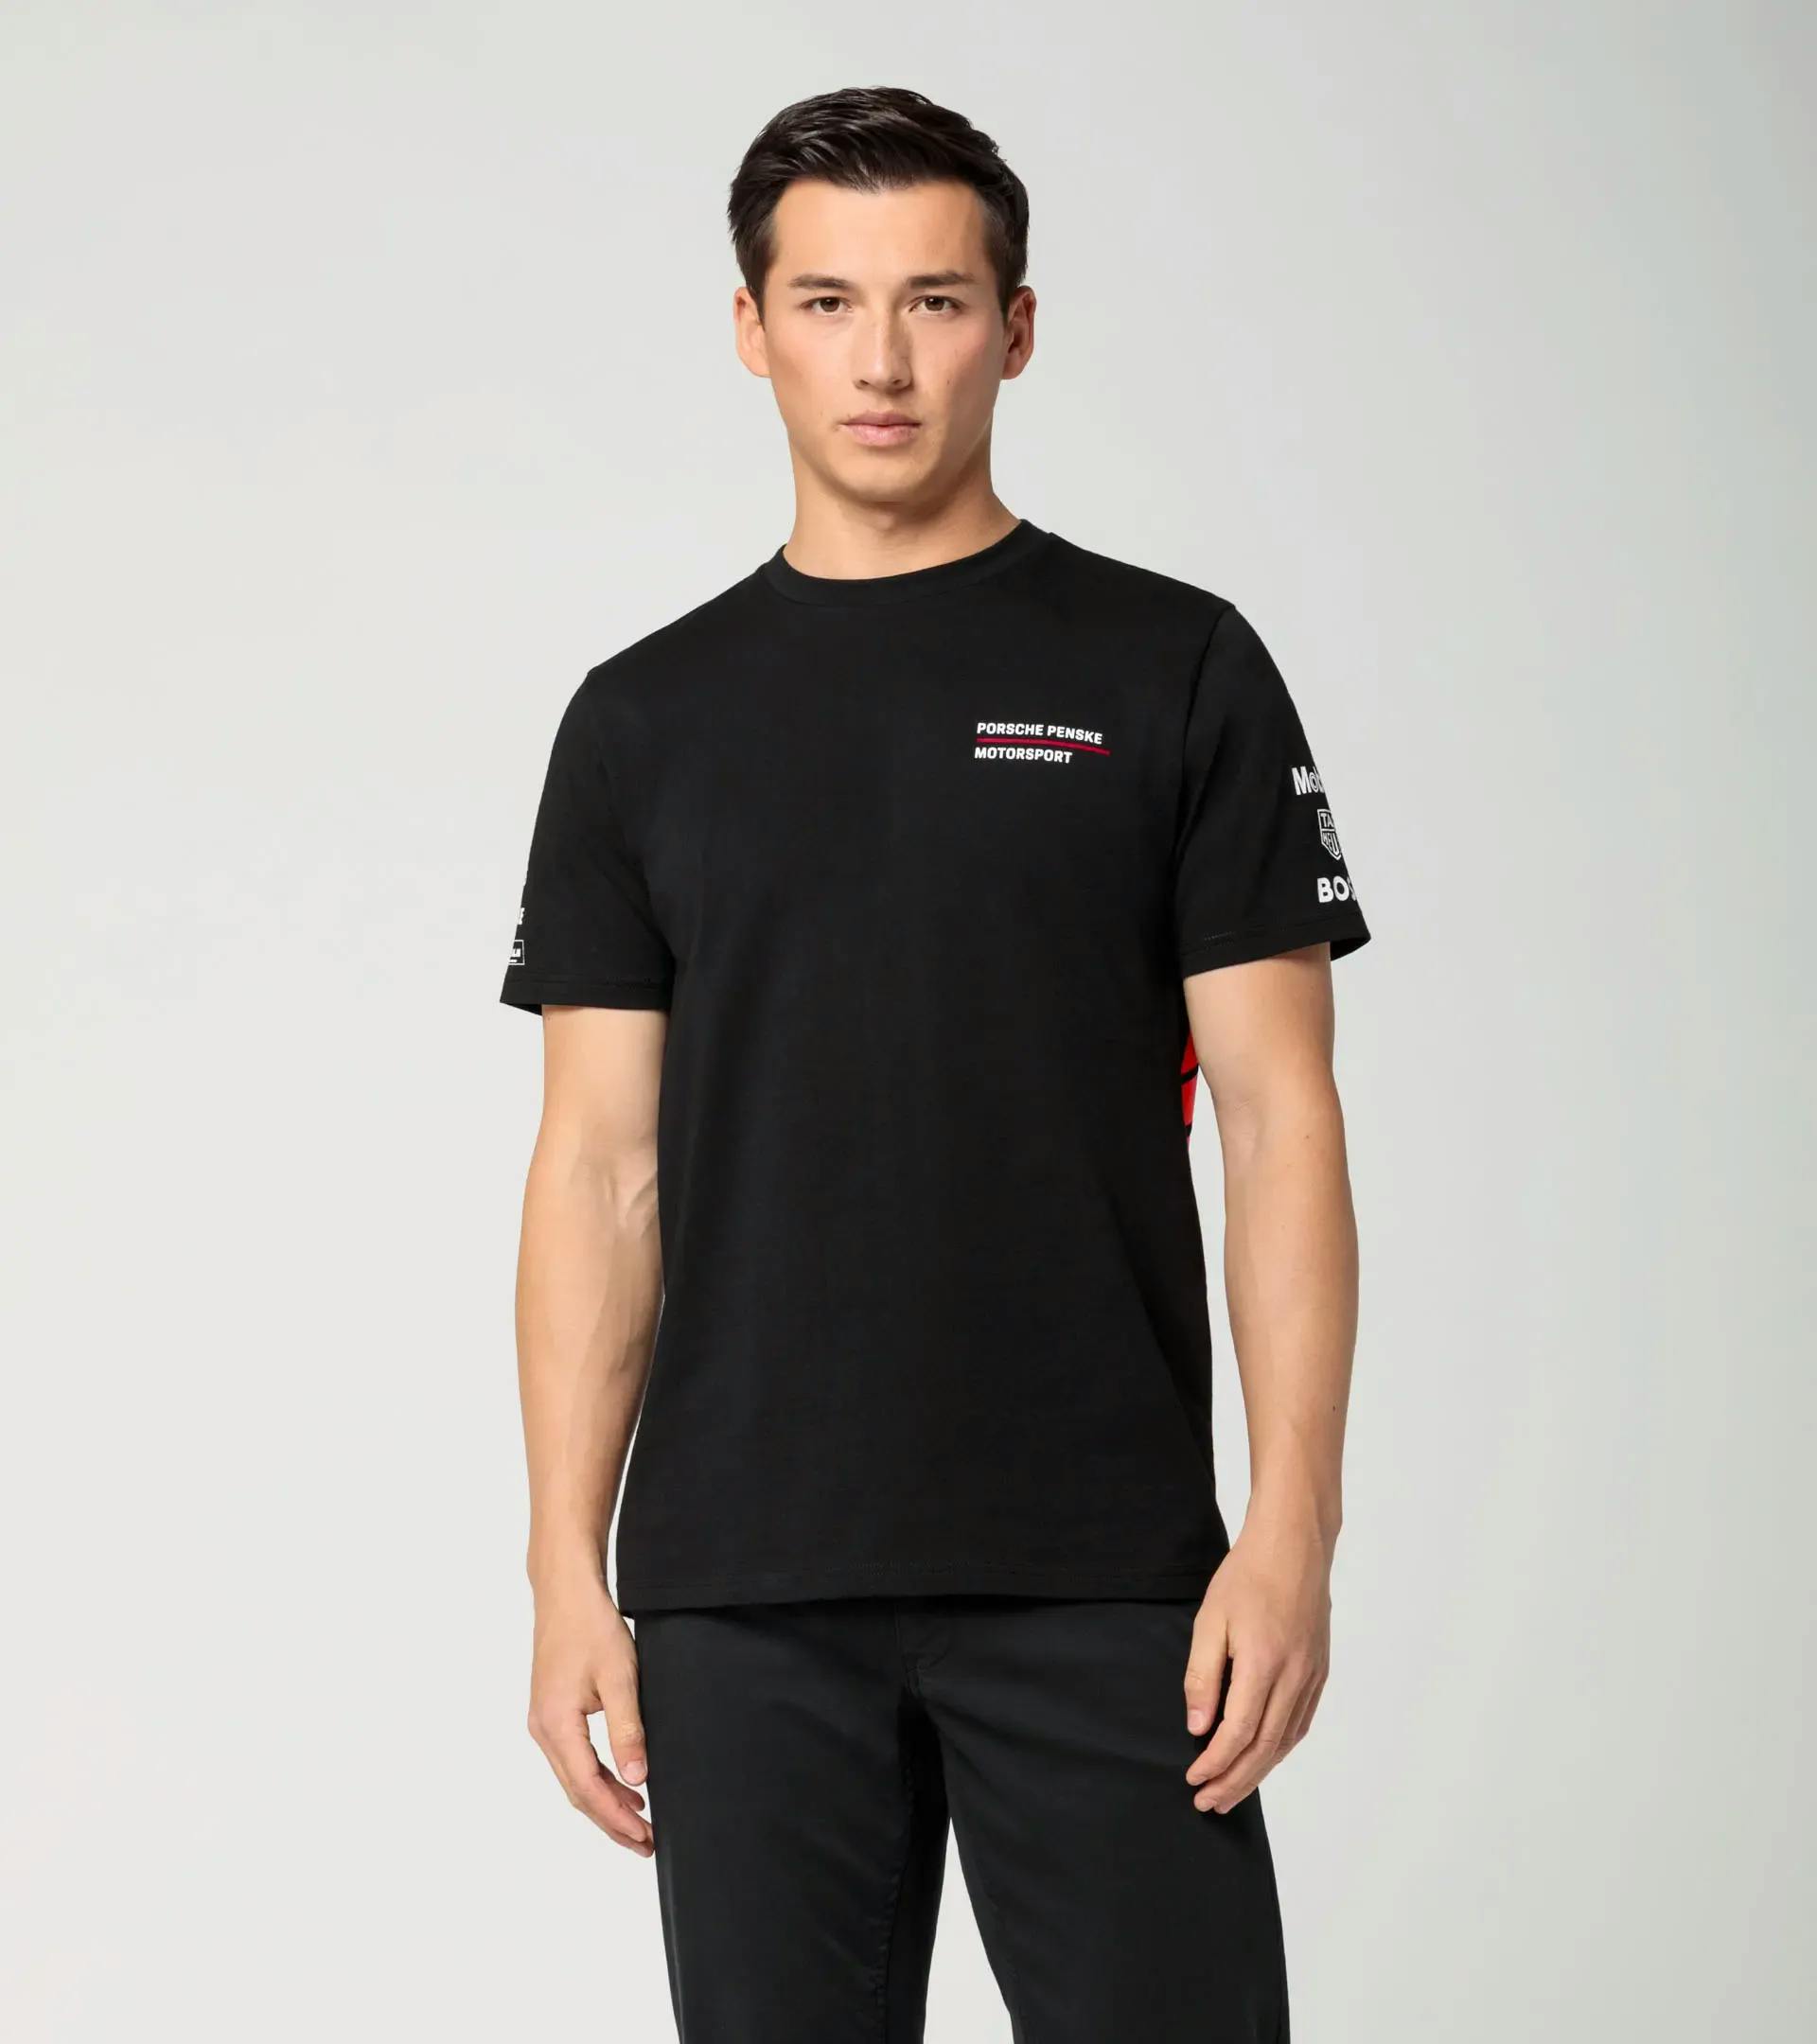 Unisex T-Shirt – Porsche Penske Motorsport 5